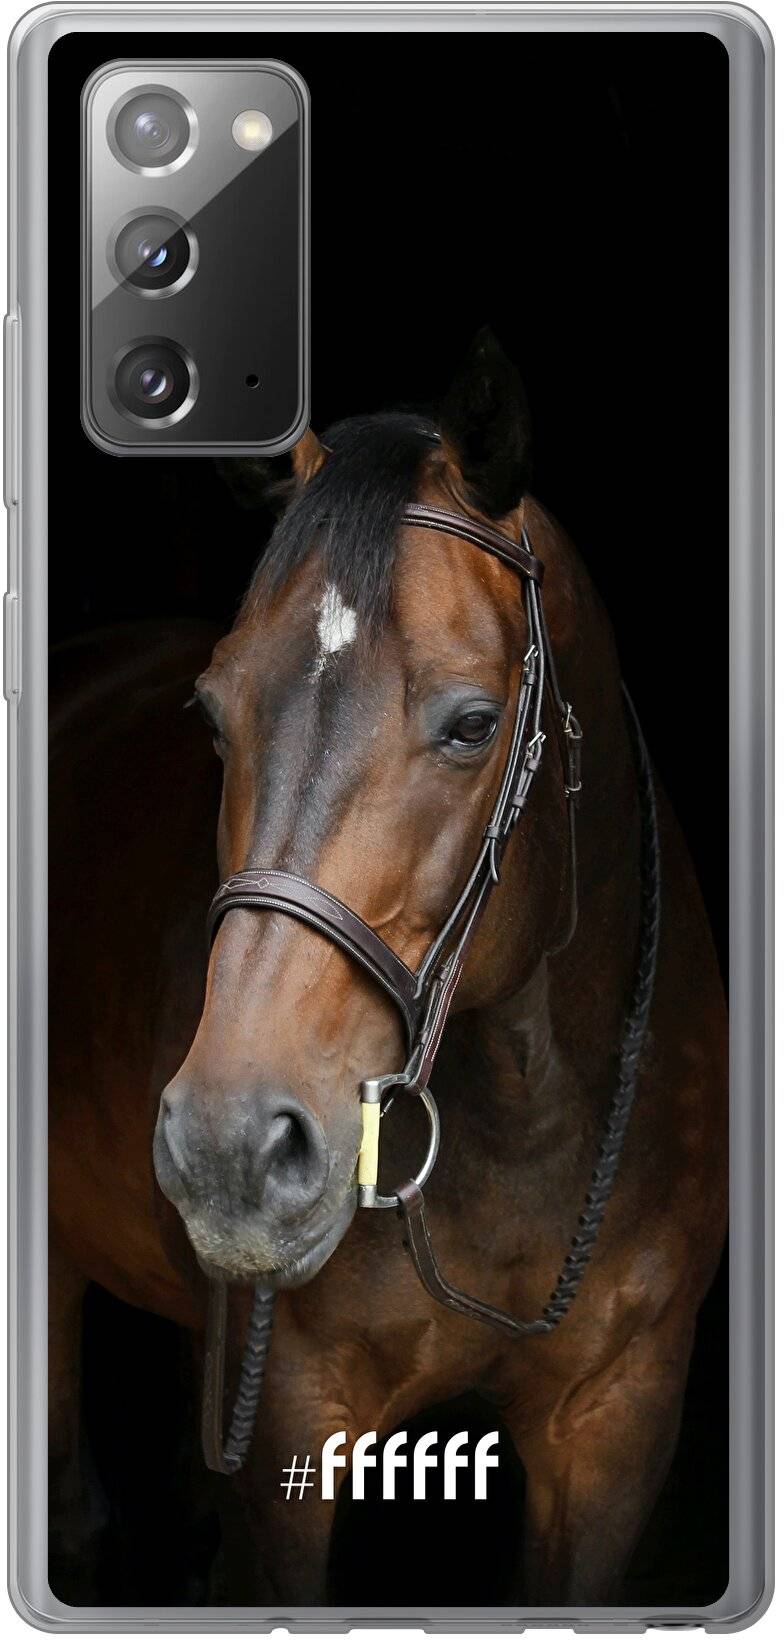 Horse Galaxy Note 20